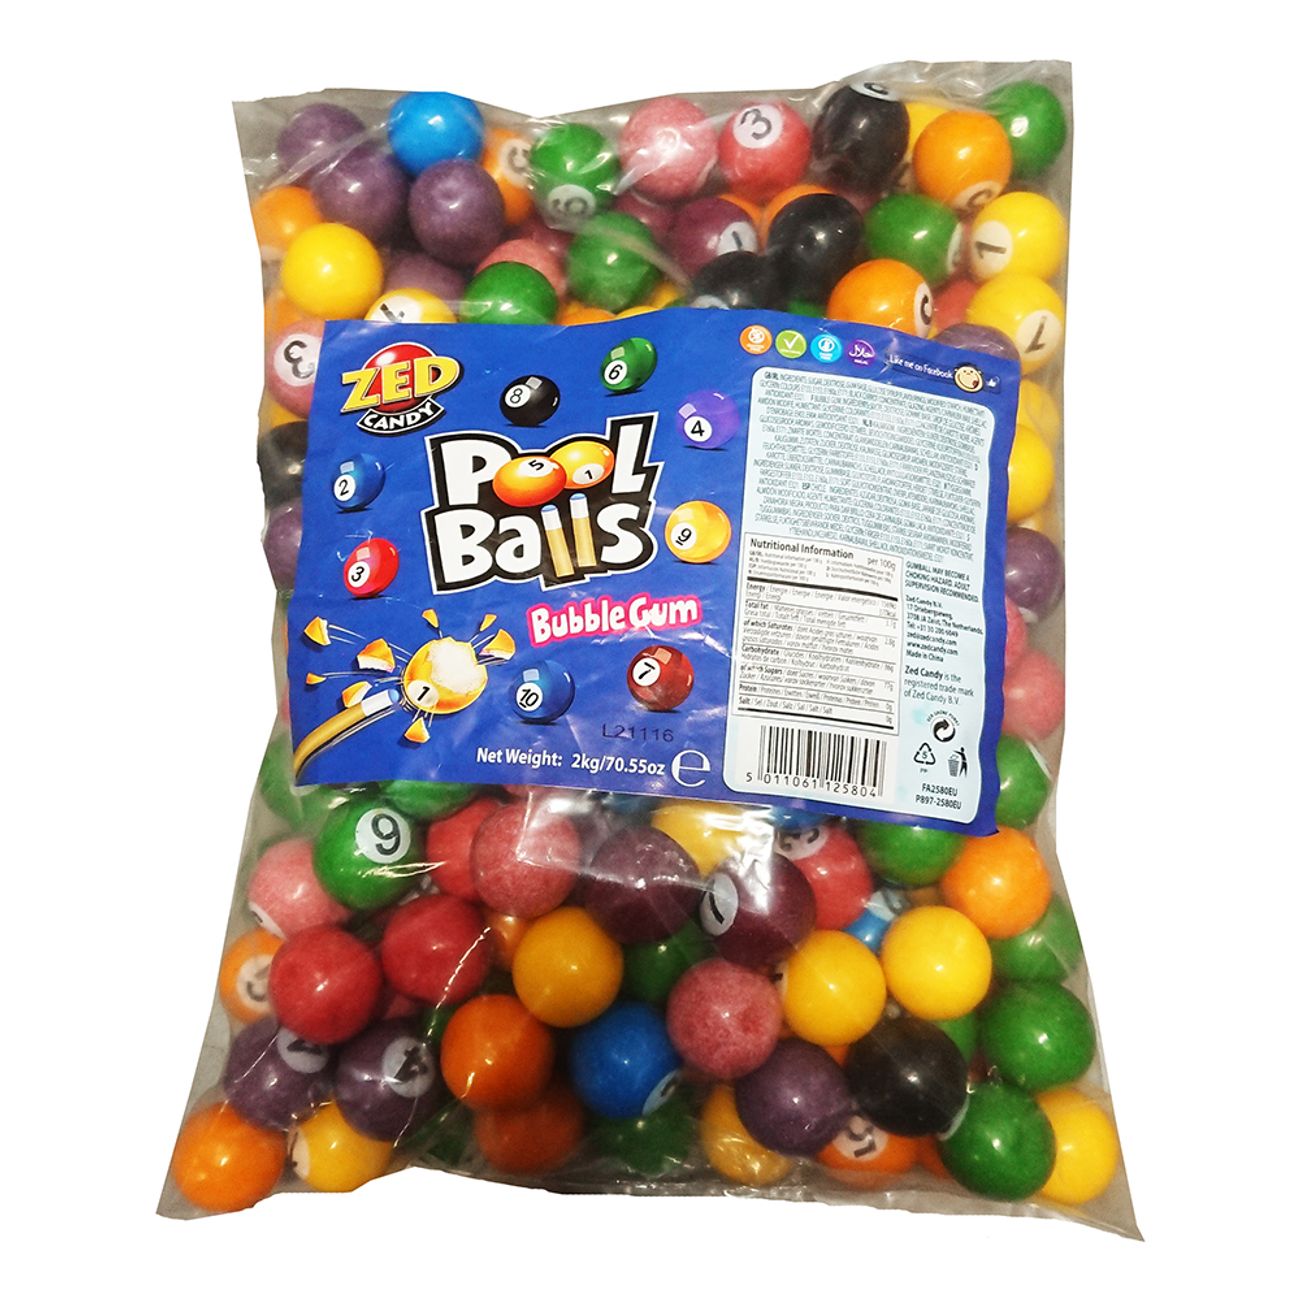 pool-balls-tuggummi-storpack-77322-1